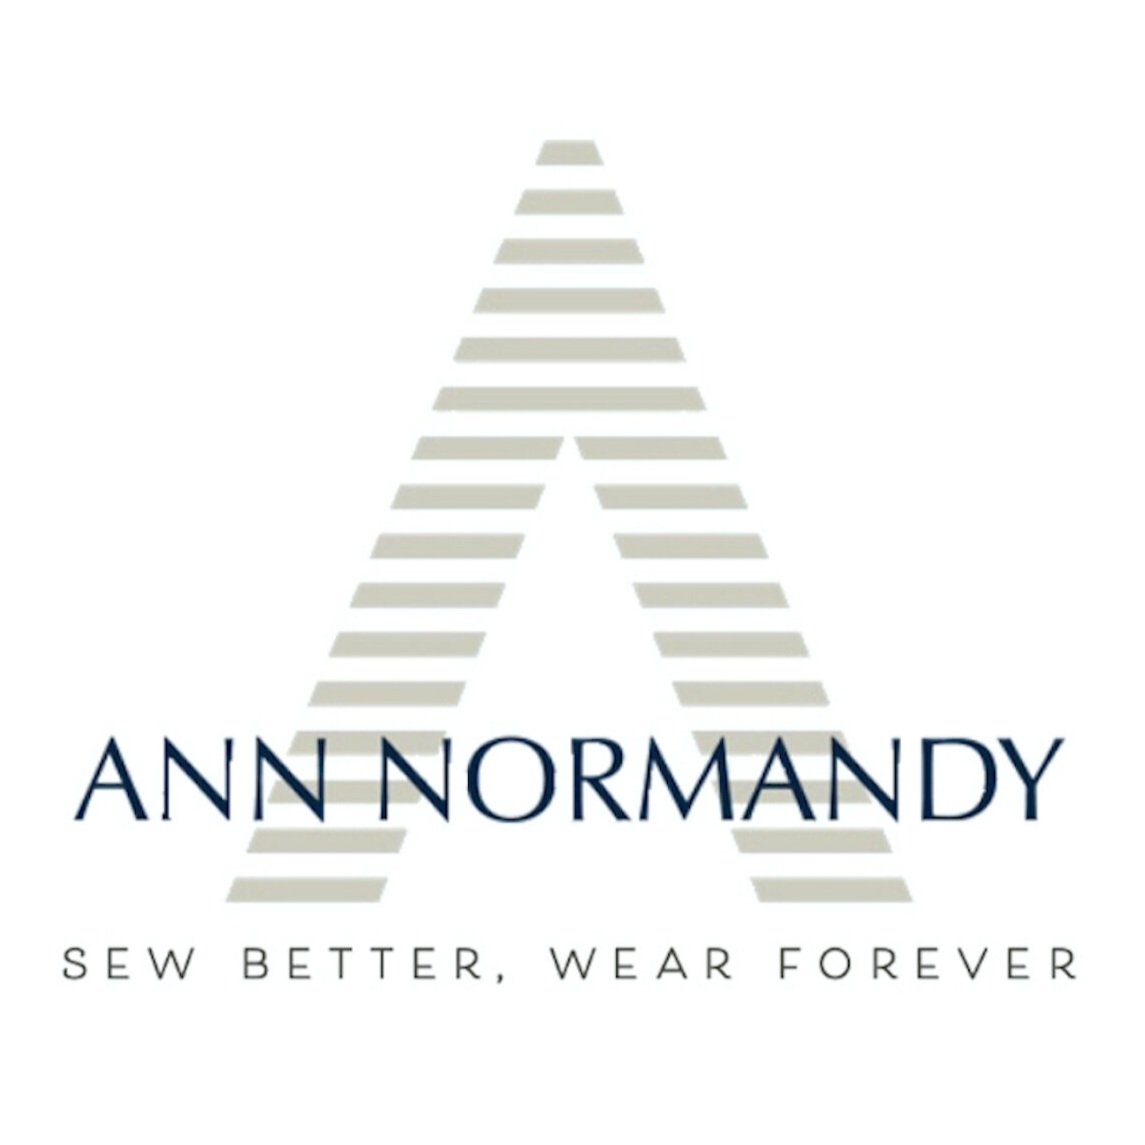 Sewing Patterns | Ann Normandy Design